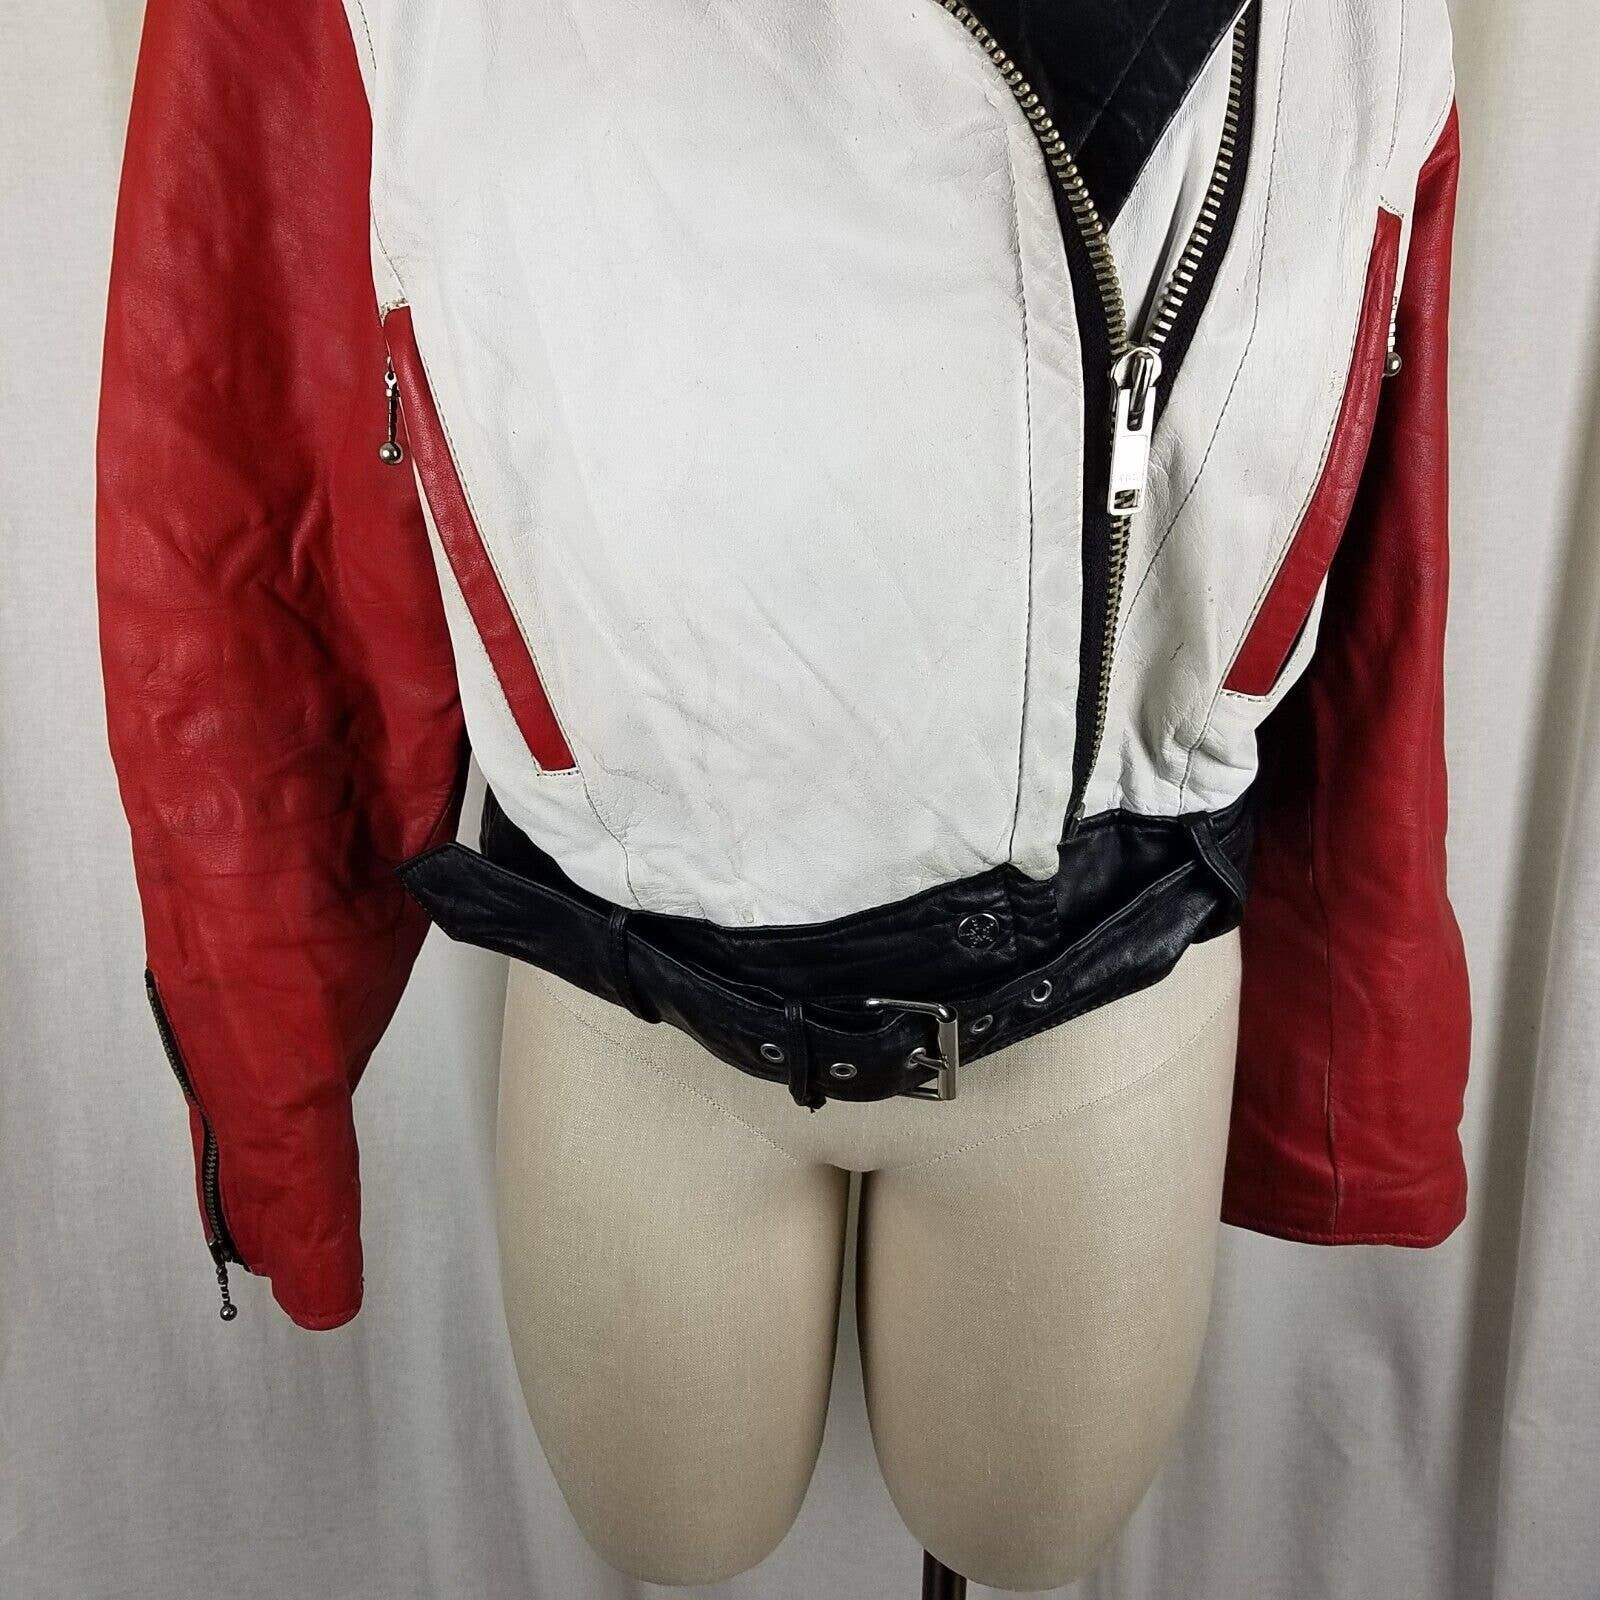 Vintage Chia Colorblock Leather Moto Biker Jacket Belted MJ Thriller Size L / US 10 / IT 46 - 3 Thumbnail